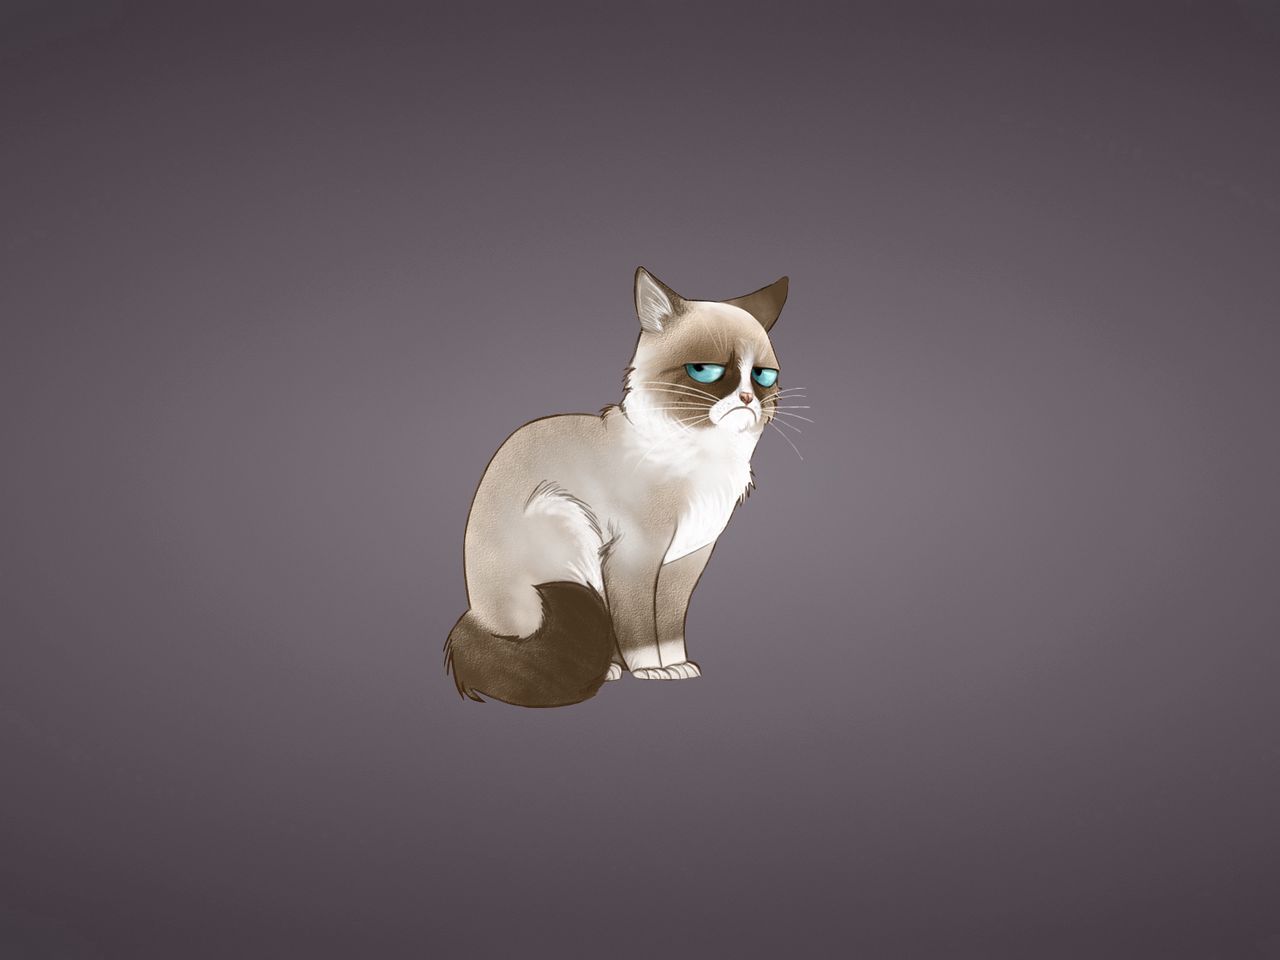 Download wallpaper 1280x960 grumpy cat, meme, cat standard 4:3 hd background